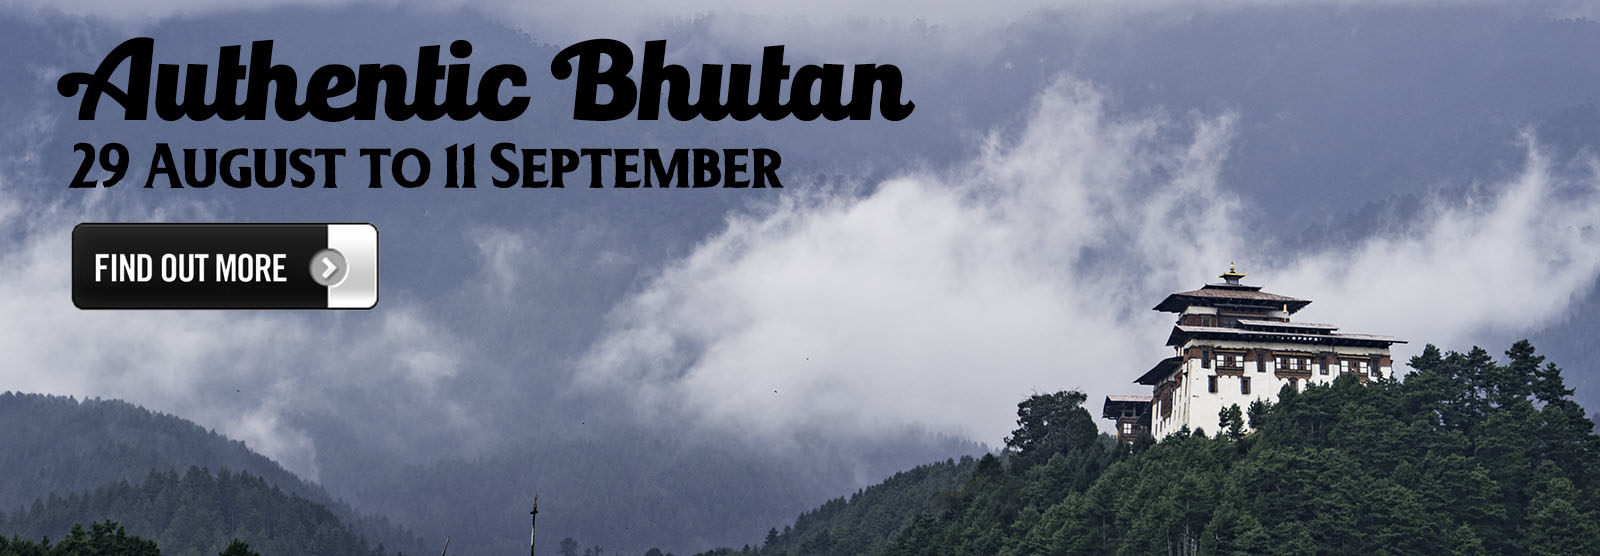 bhutan2018cover1600